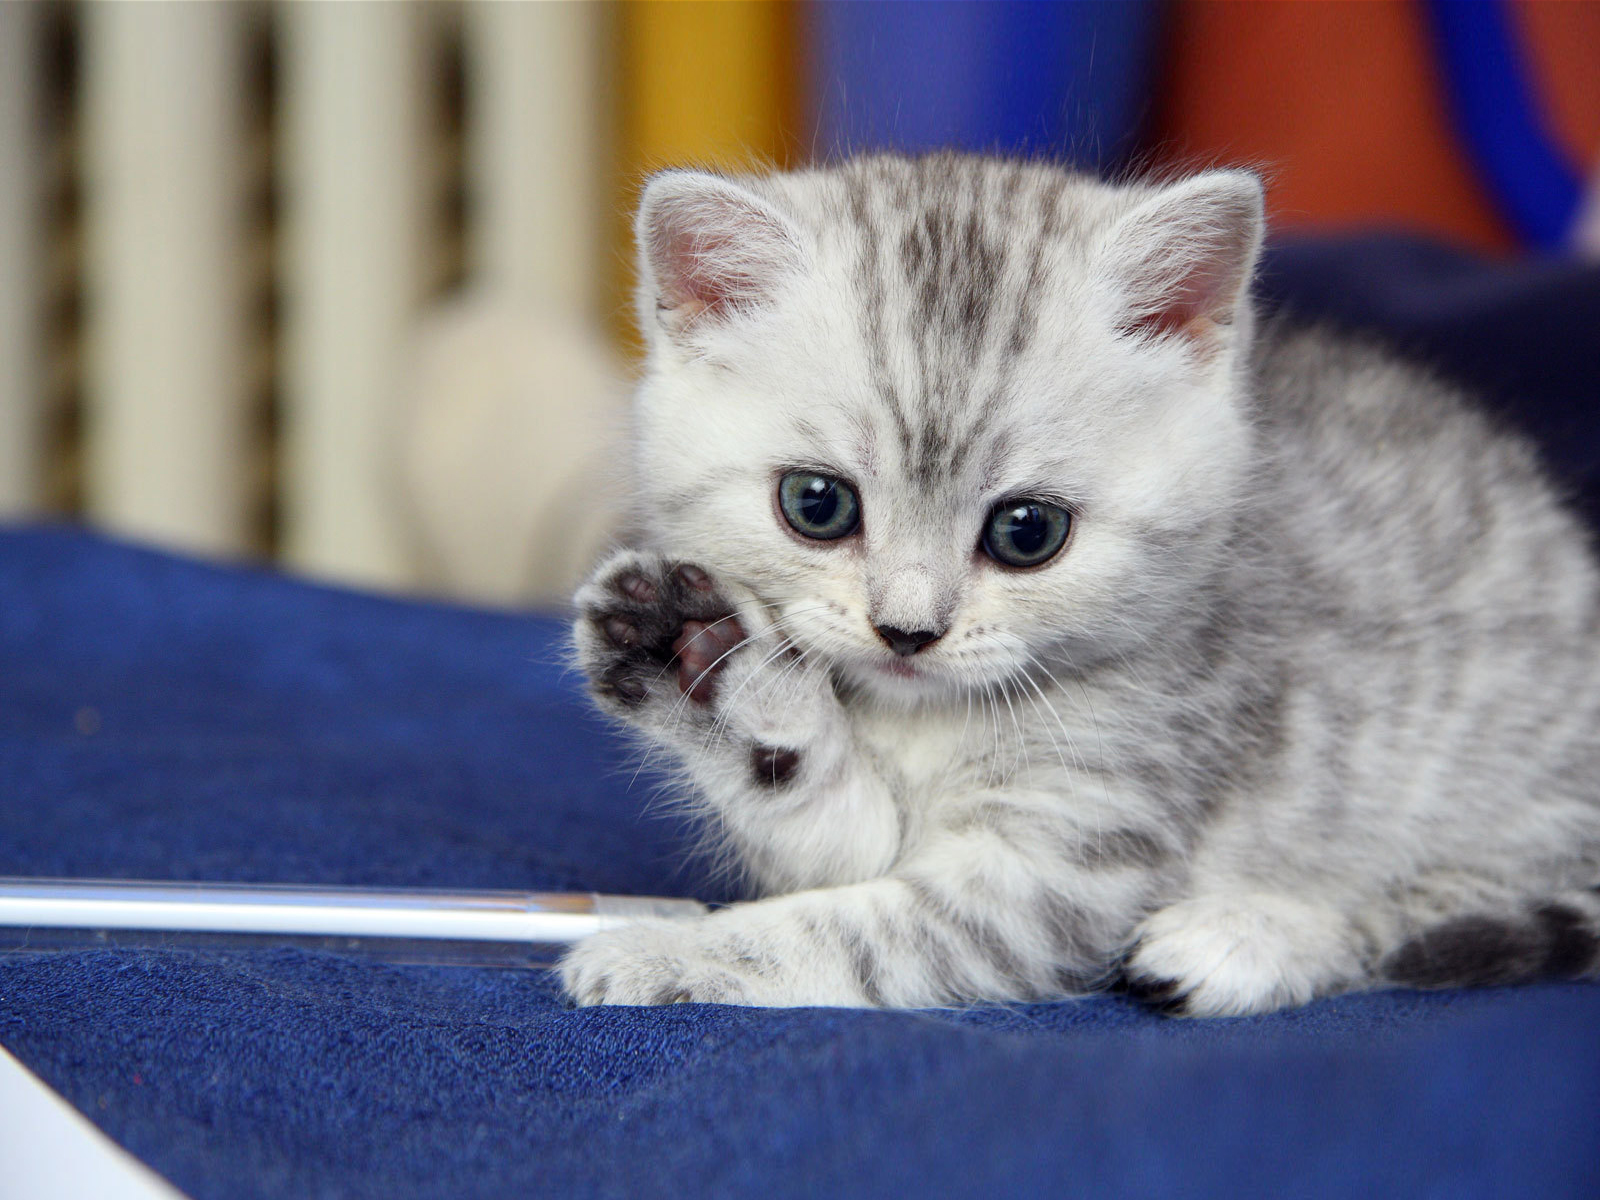 Cute kitty wallpaper cats